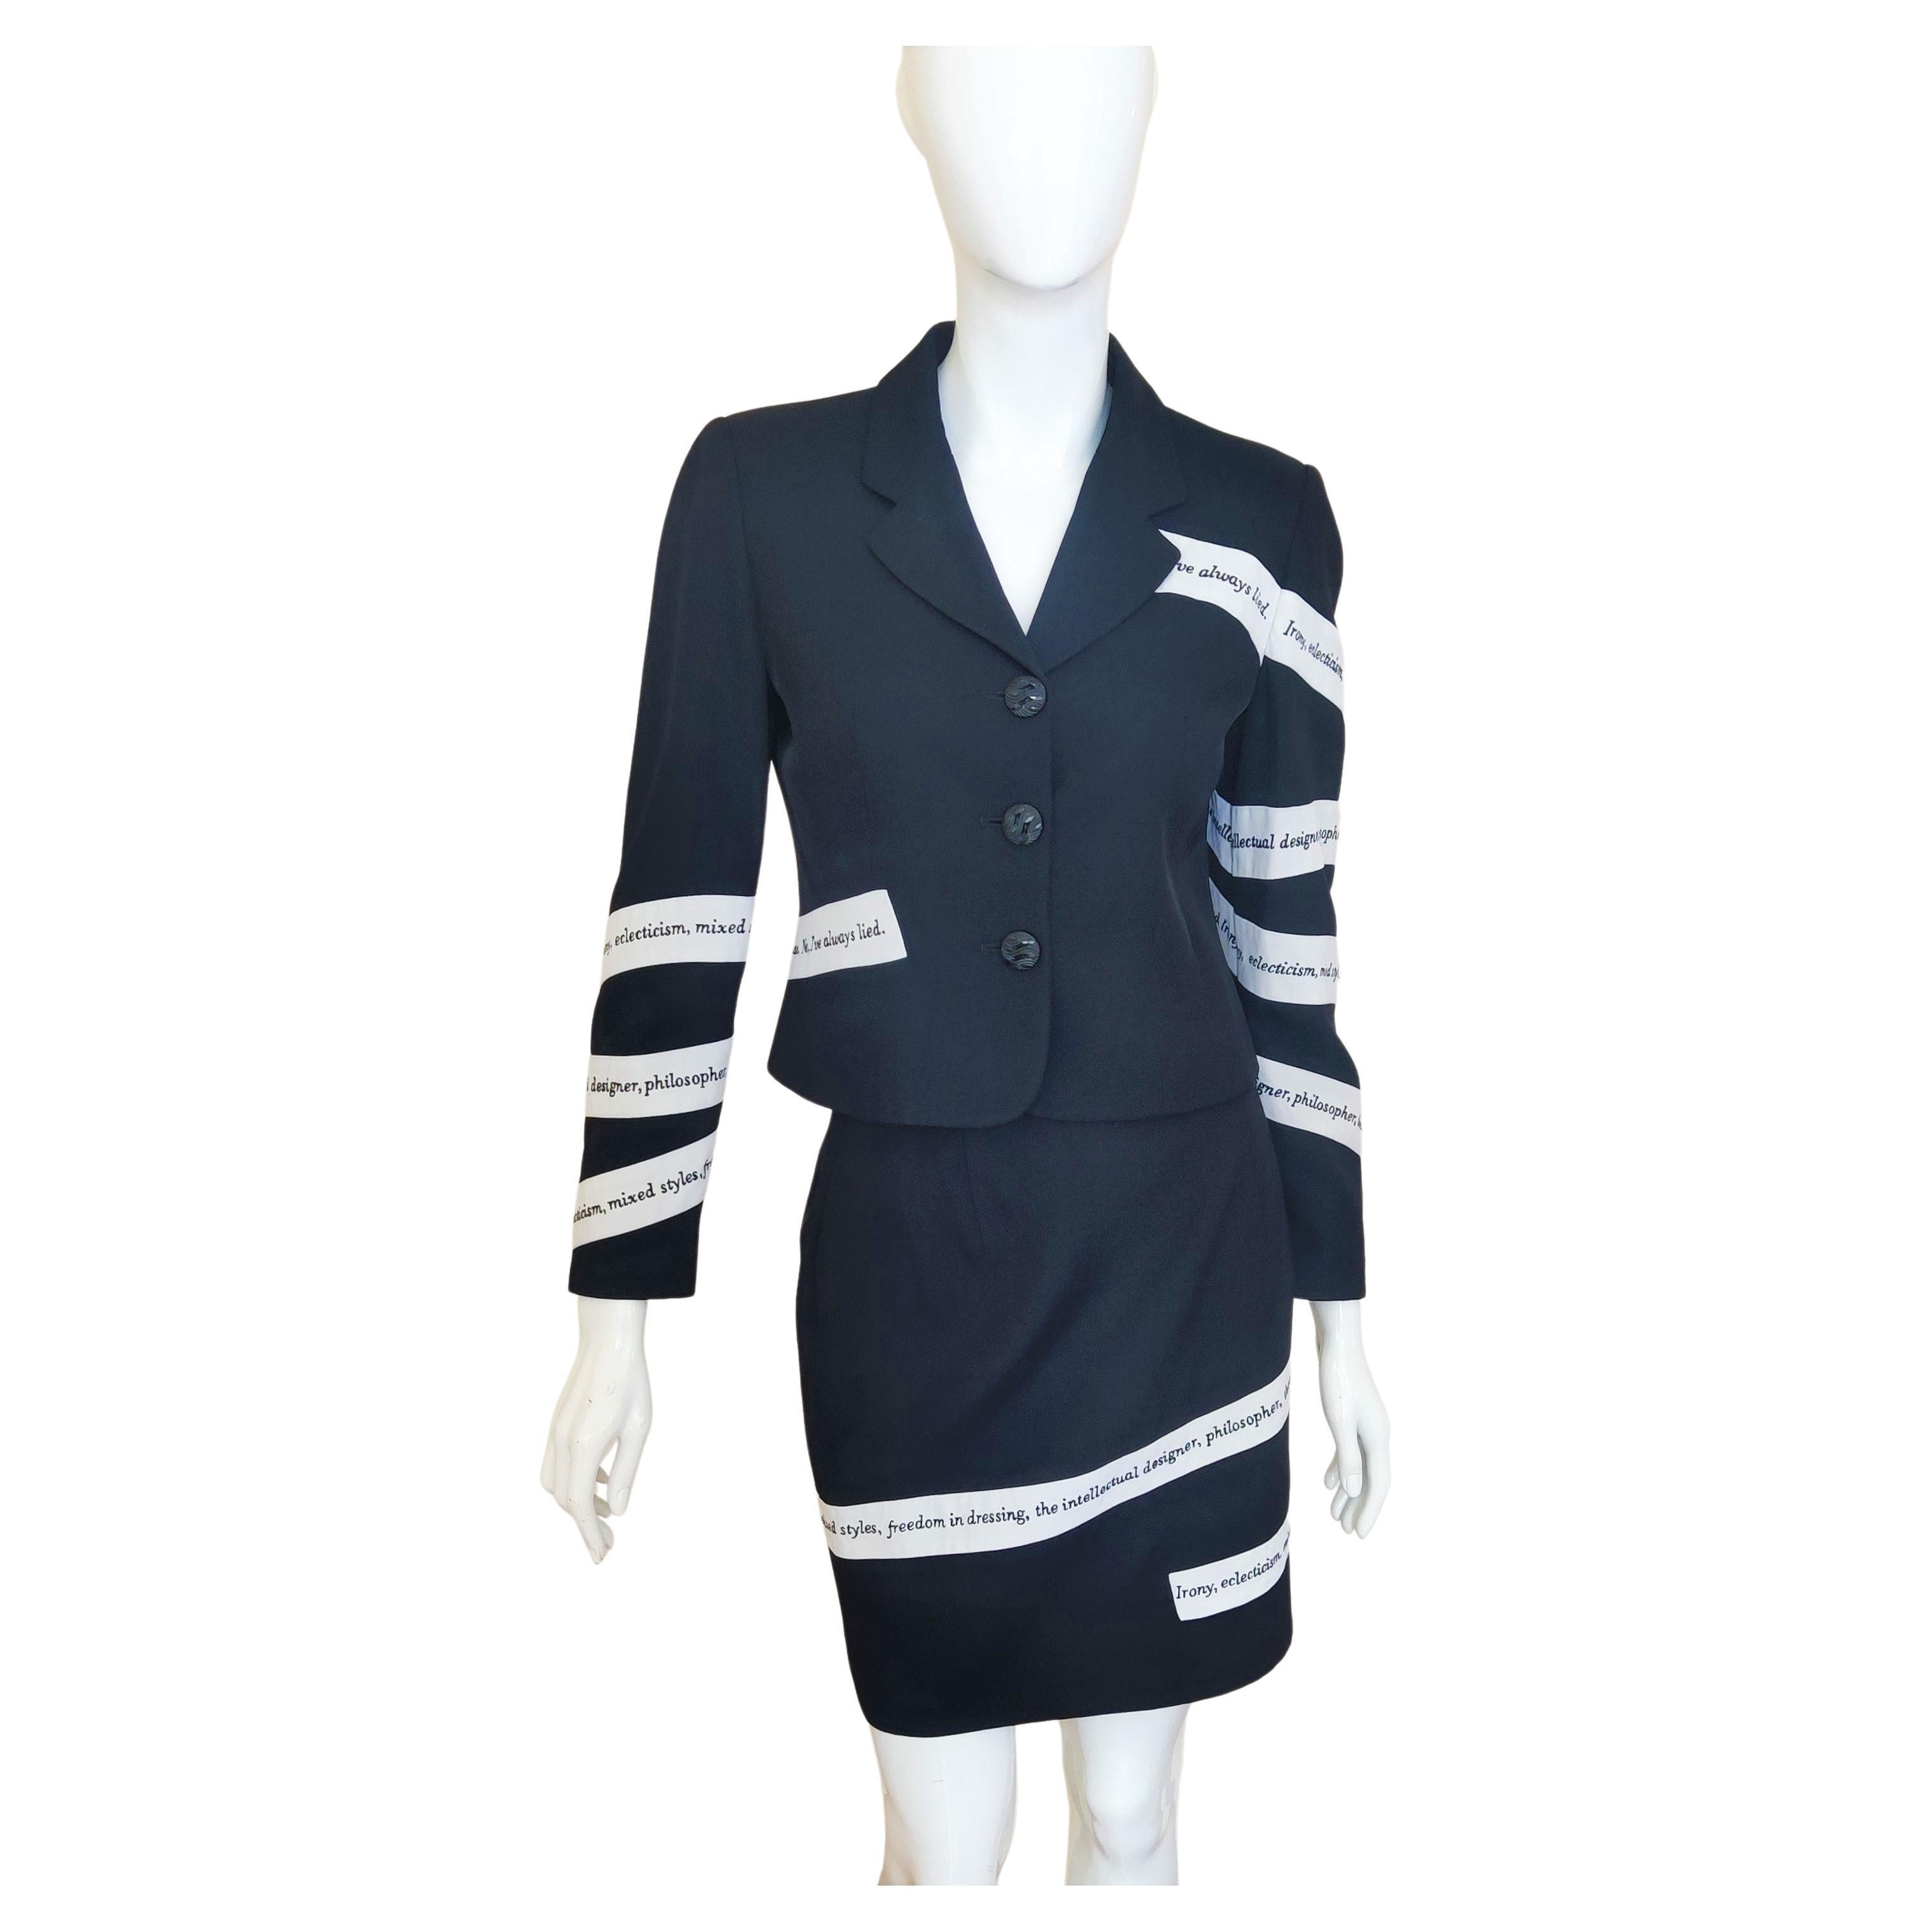 Moschino Cheap and Chic Irony Text Tape Vintage Couture Schwarz-Weißes Kleid Anzug im Angebot